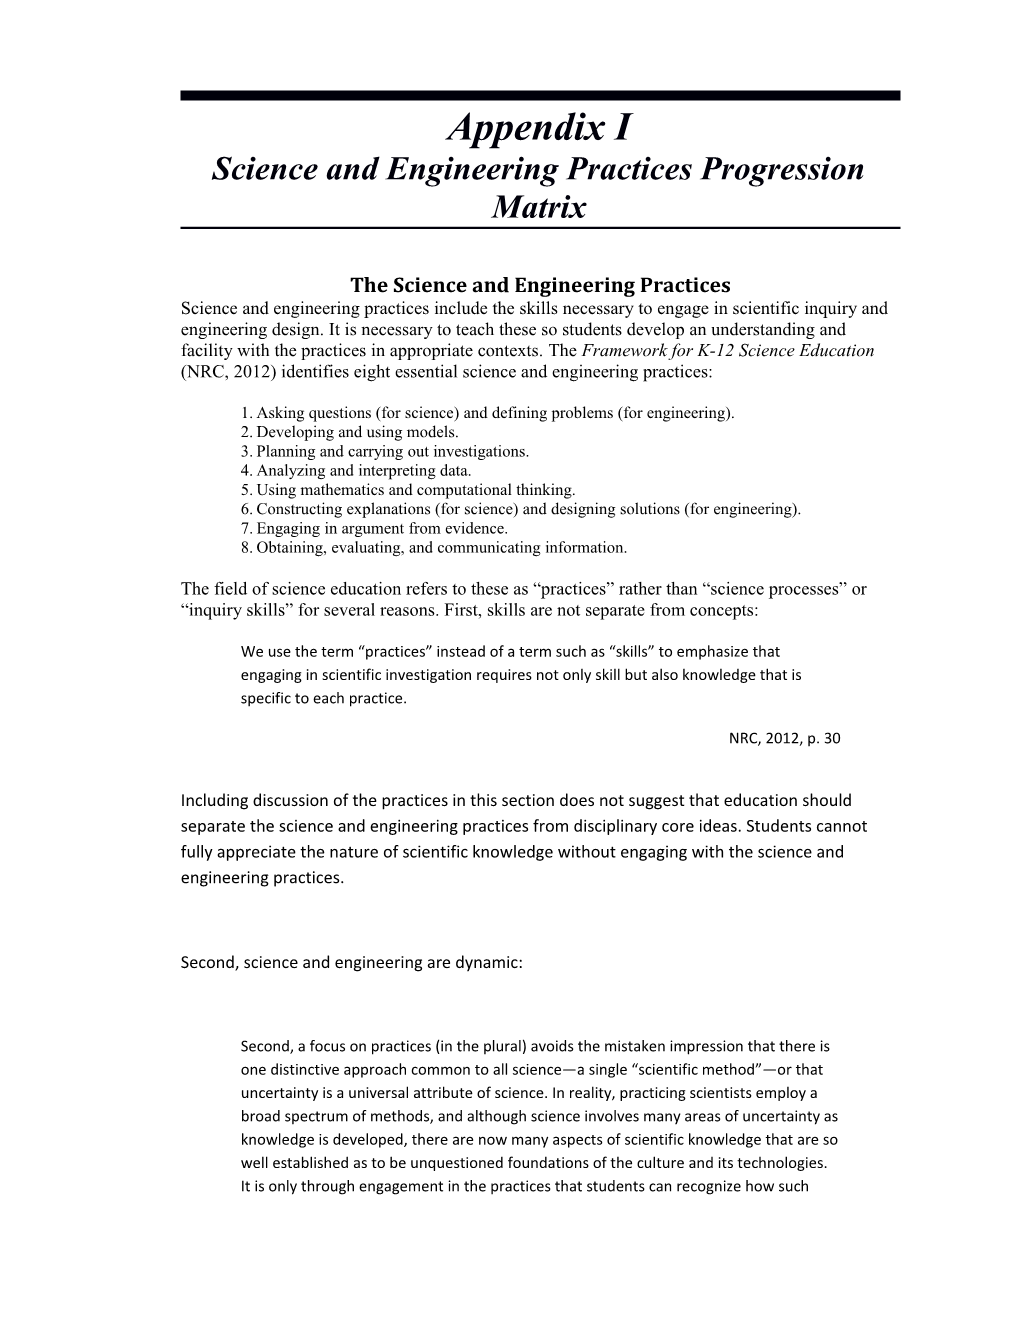 Appendix I: Science and Engineering Practices Progression Matrix